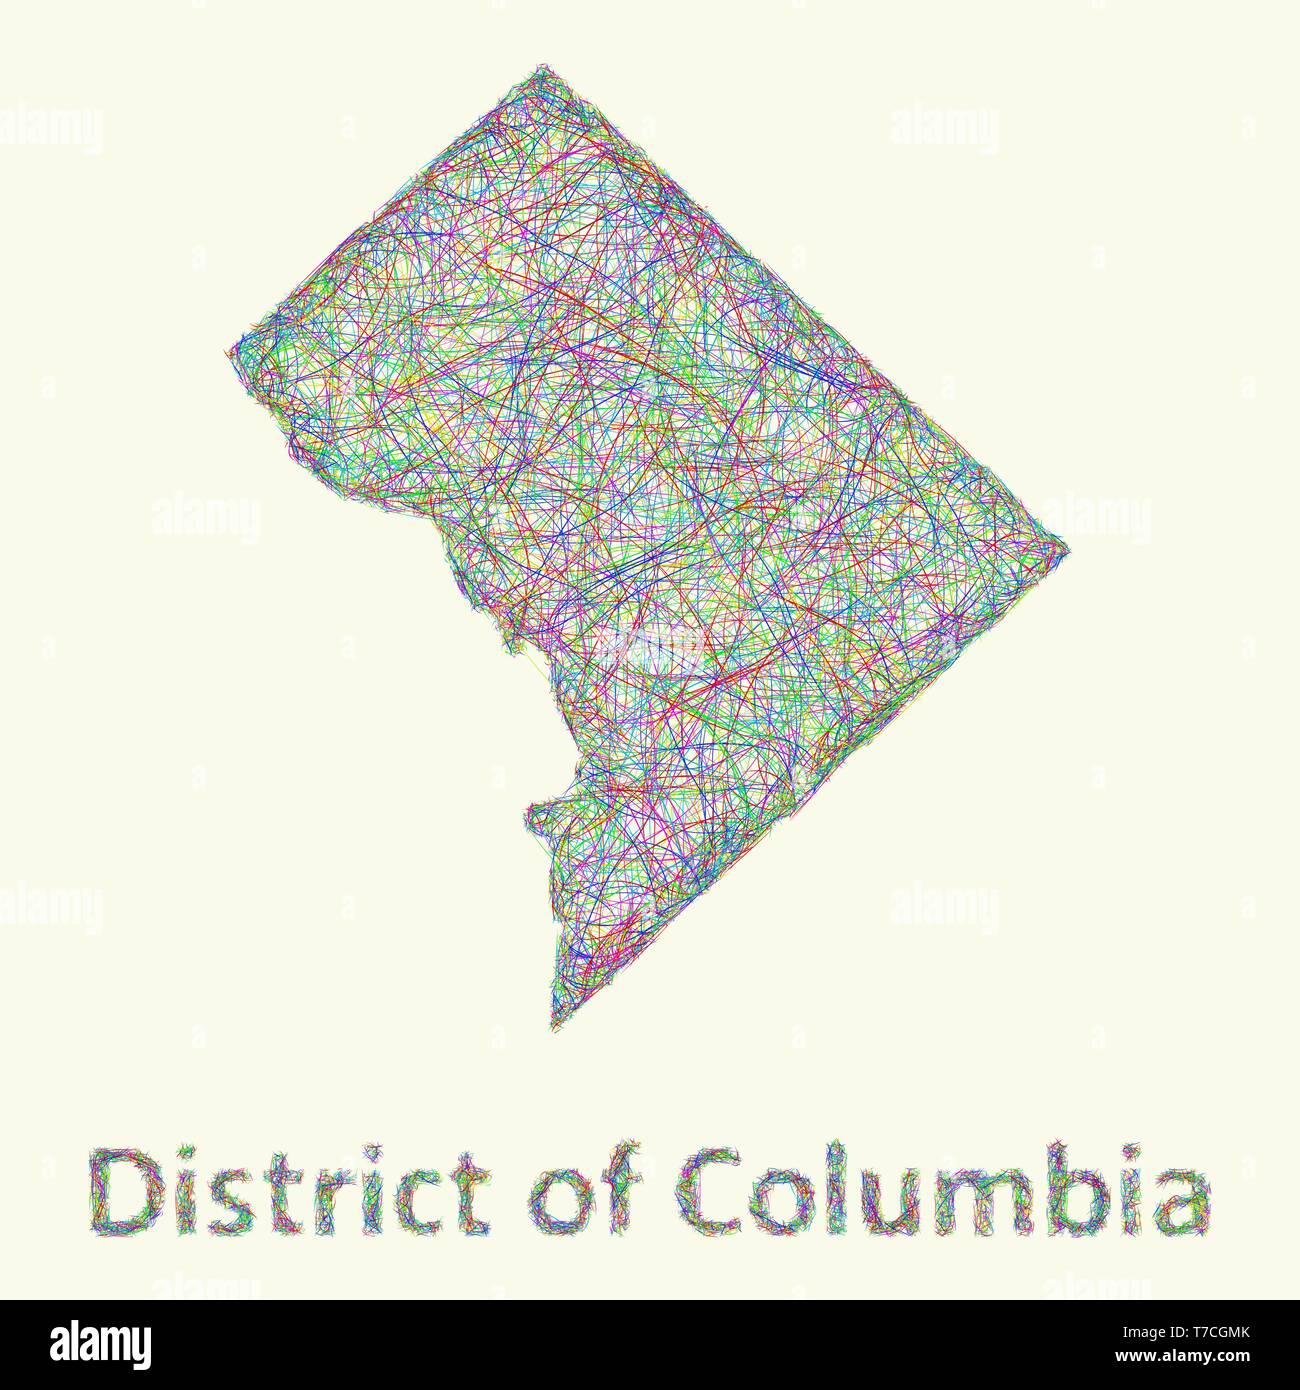 District of Columbia line art map Stock Vector